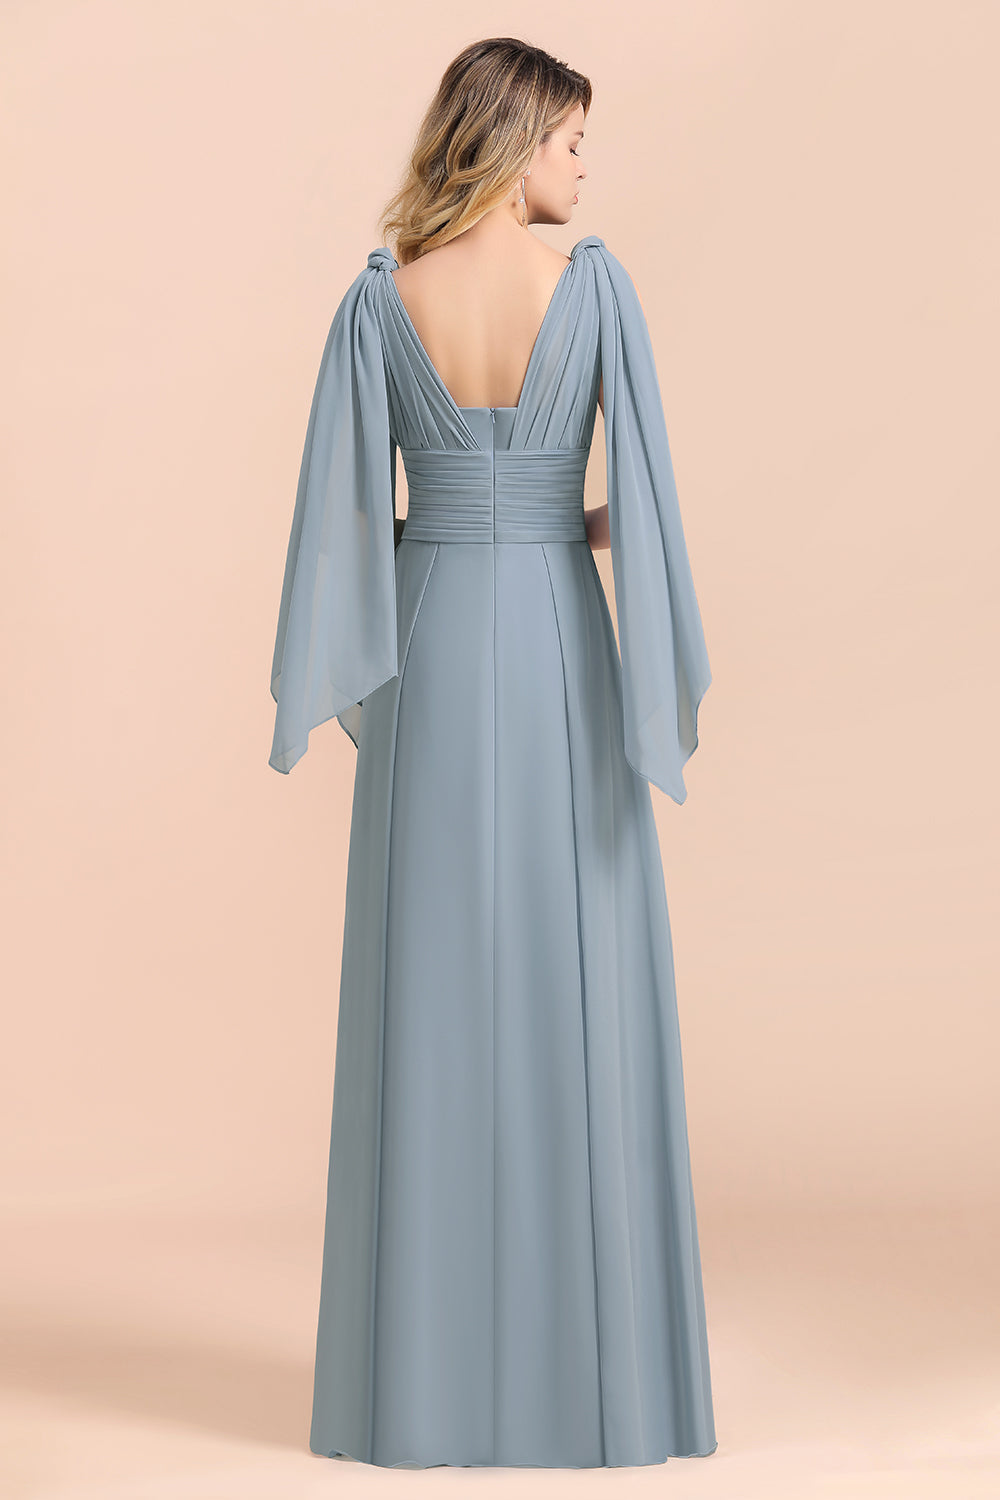 Affordable Dusty Blue Ruffle Convertible Bridemsiad Dress-27dress